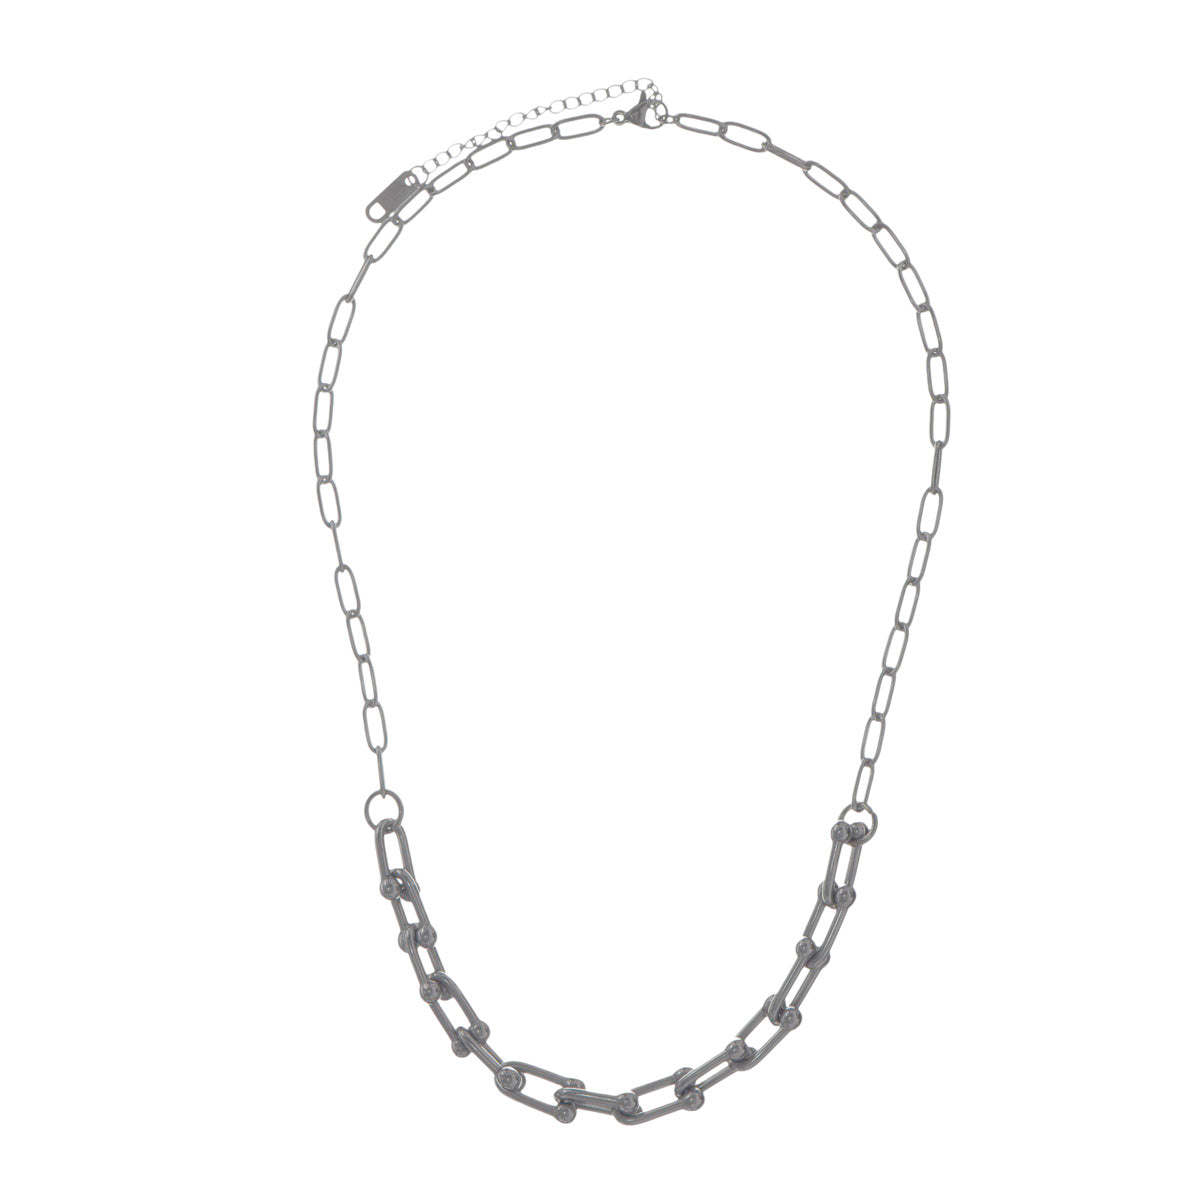 Cable chain necklace (steel) 44cm +5cm